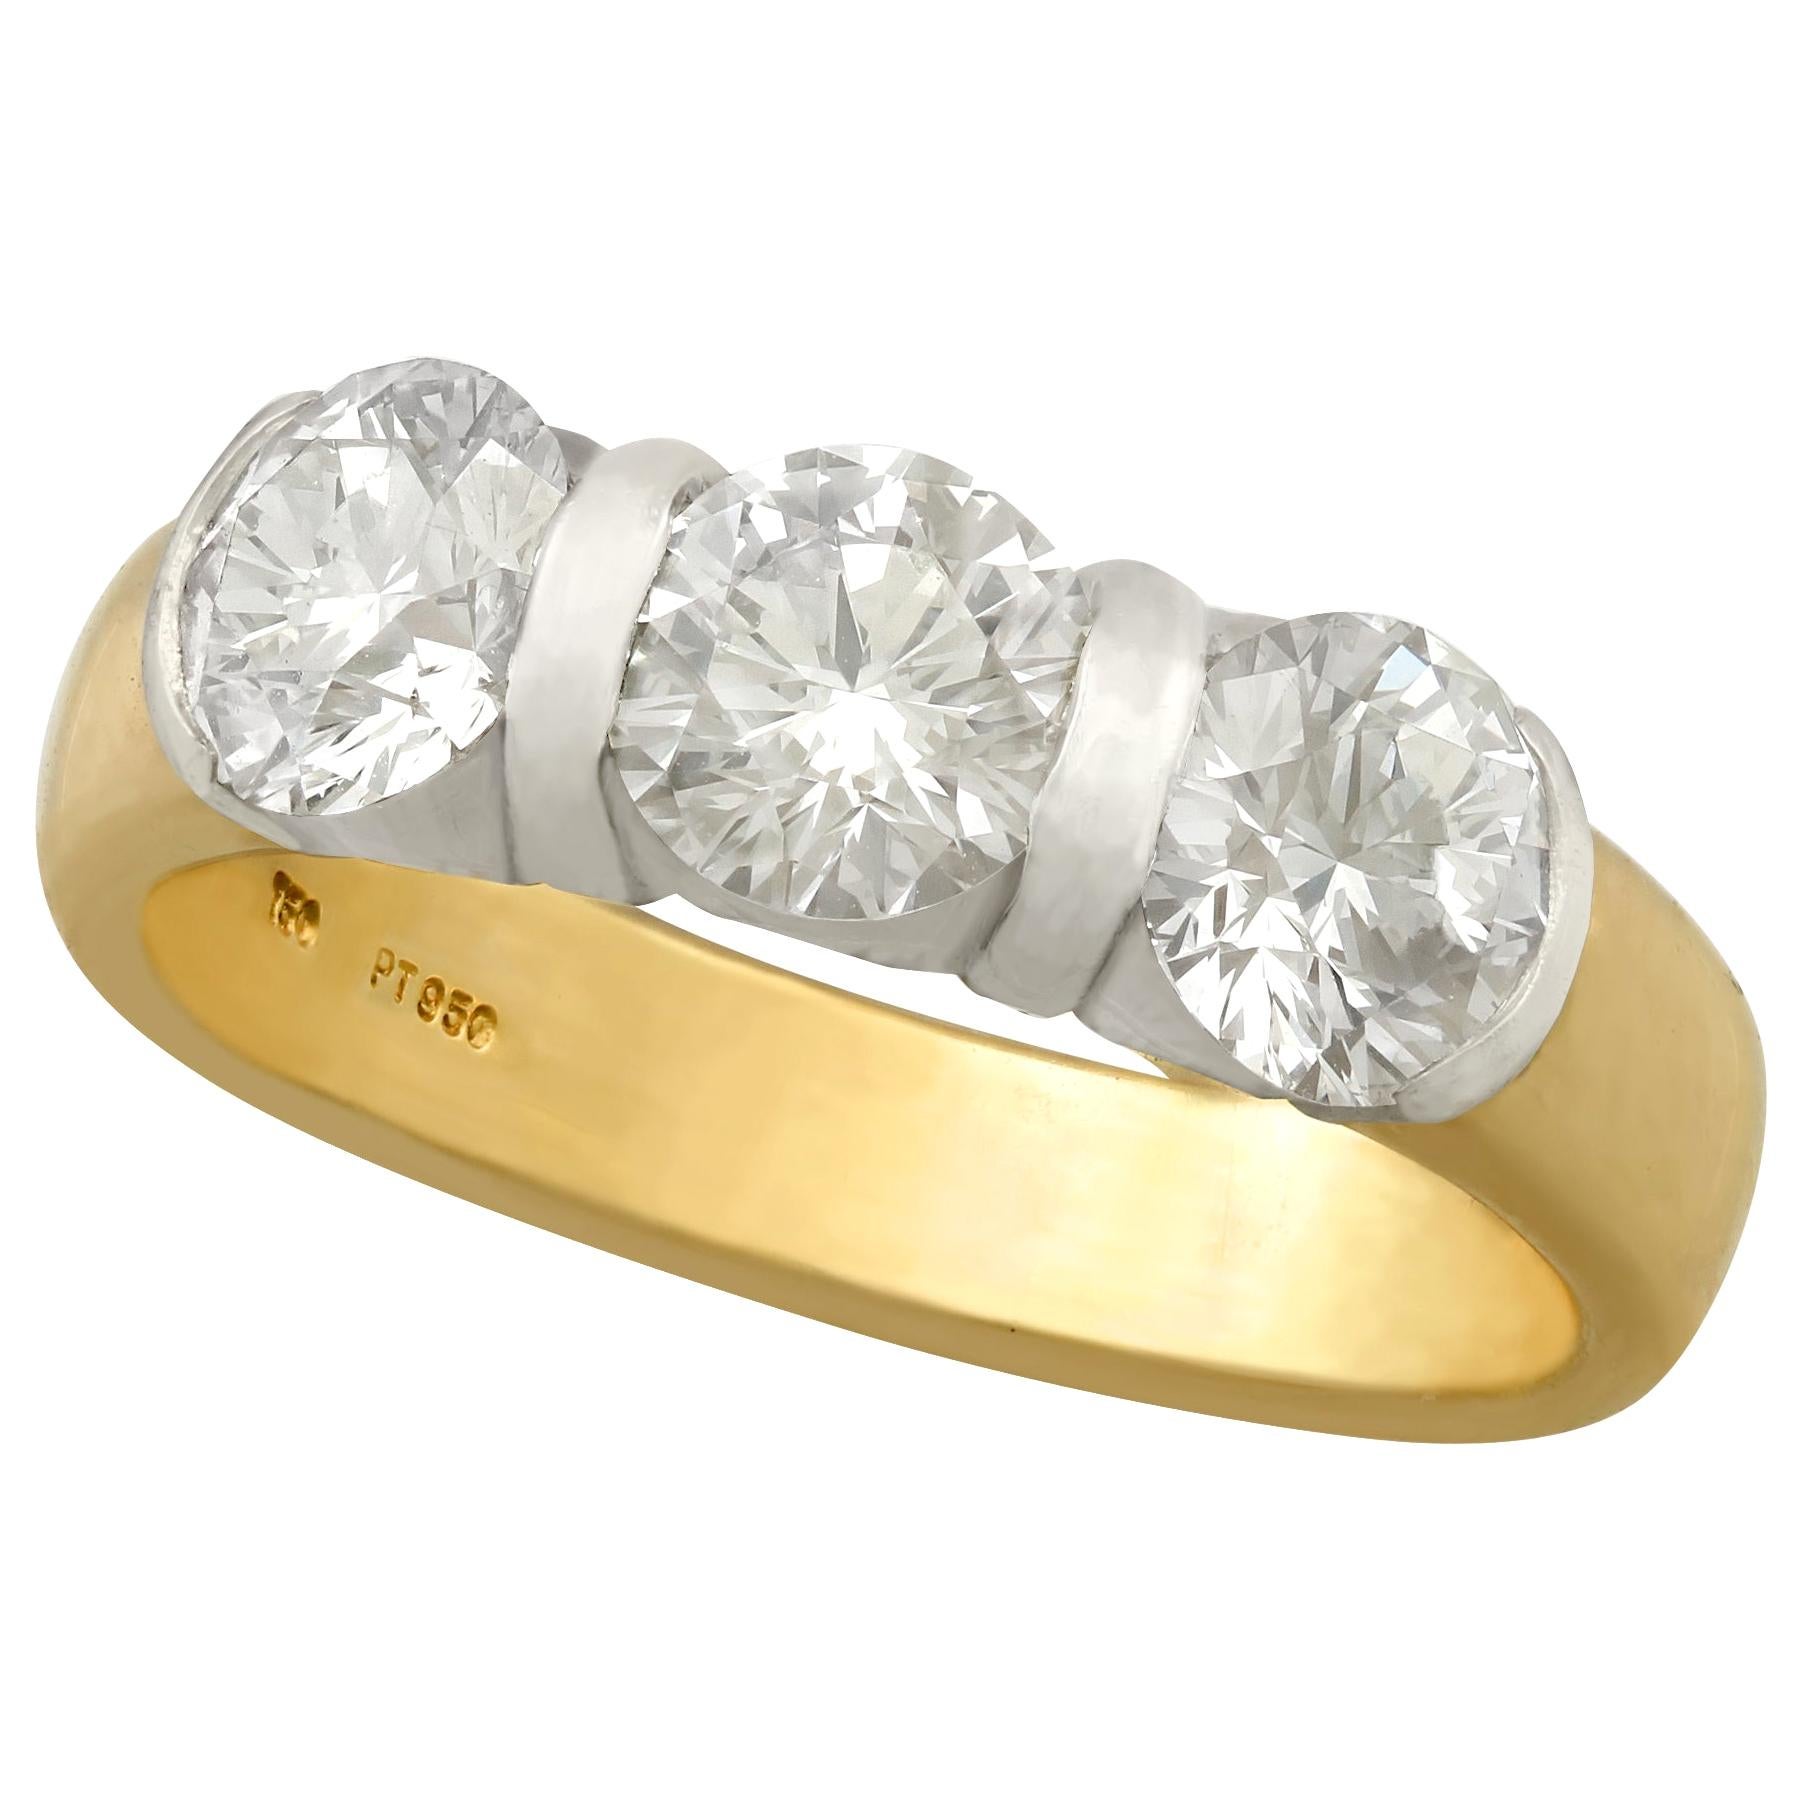 1999 2.13 Carat Diamond Yellow Gold Platinum Set Trilogy Ring by Tiffany & Co